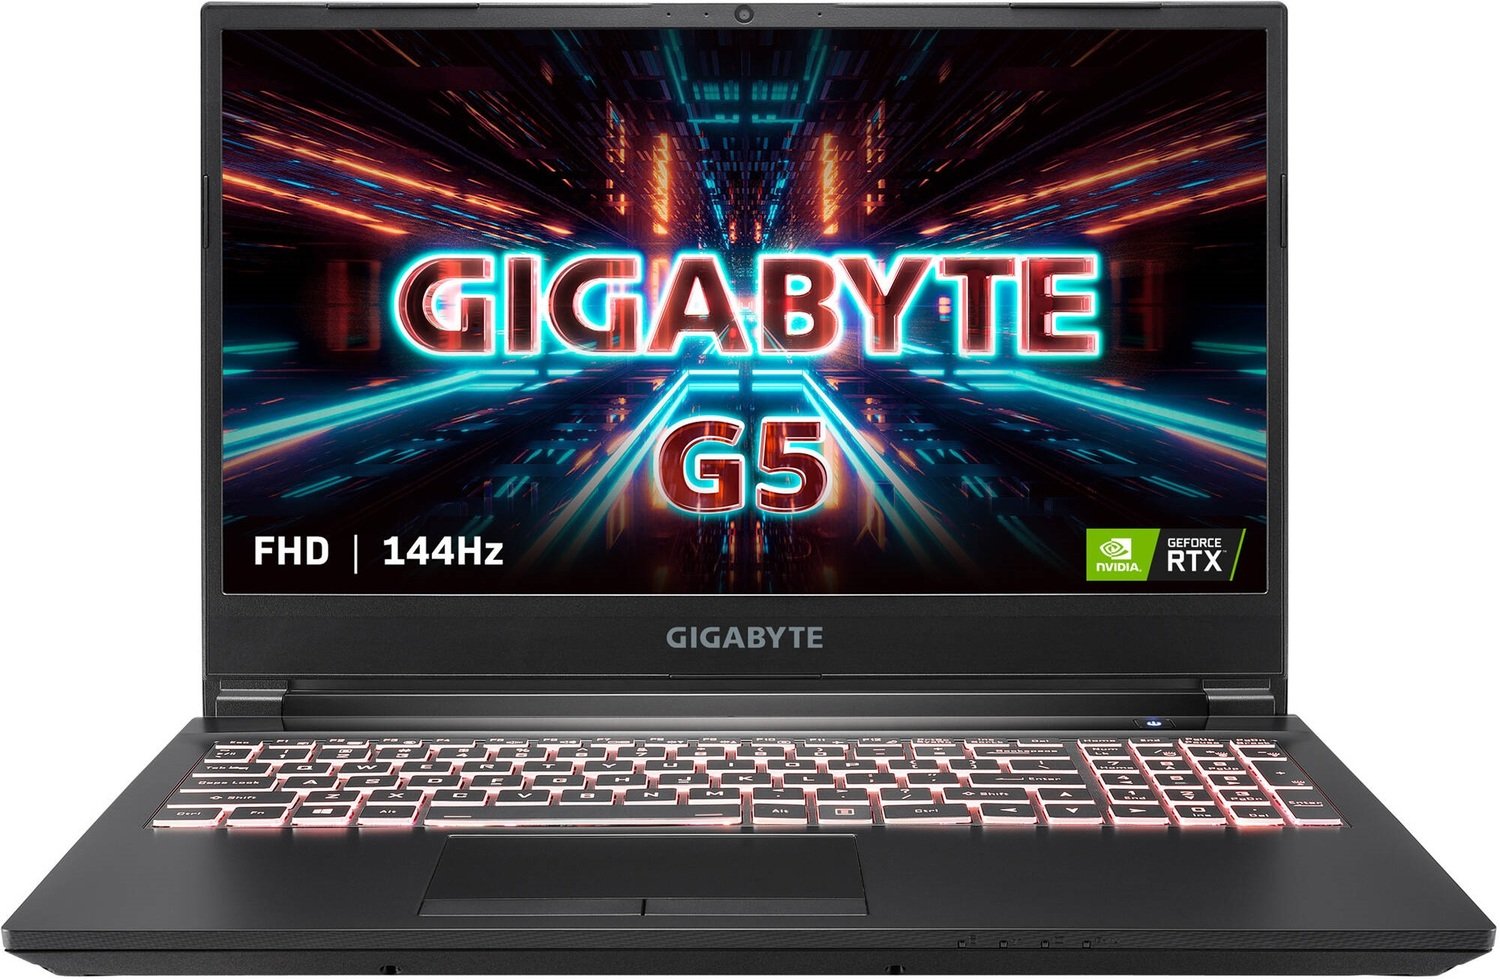 Gigabyte g5 kc. Ноутбук Gigabyte g5 Kc. Ноутбук игровой Gigabyte g5 KD-52ee123sd. Ноутбук Gigabyte g5 Kc-5ru1130sh, 15.6". Gigabyte g5 Kc-5ru1130sh.